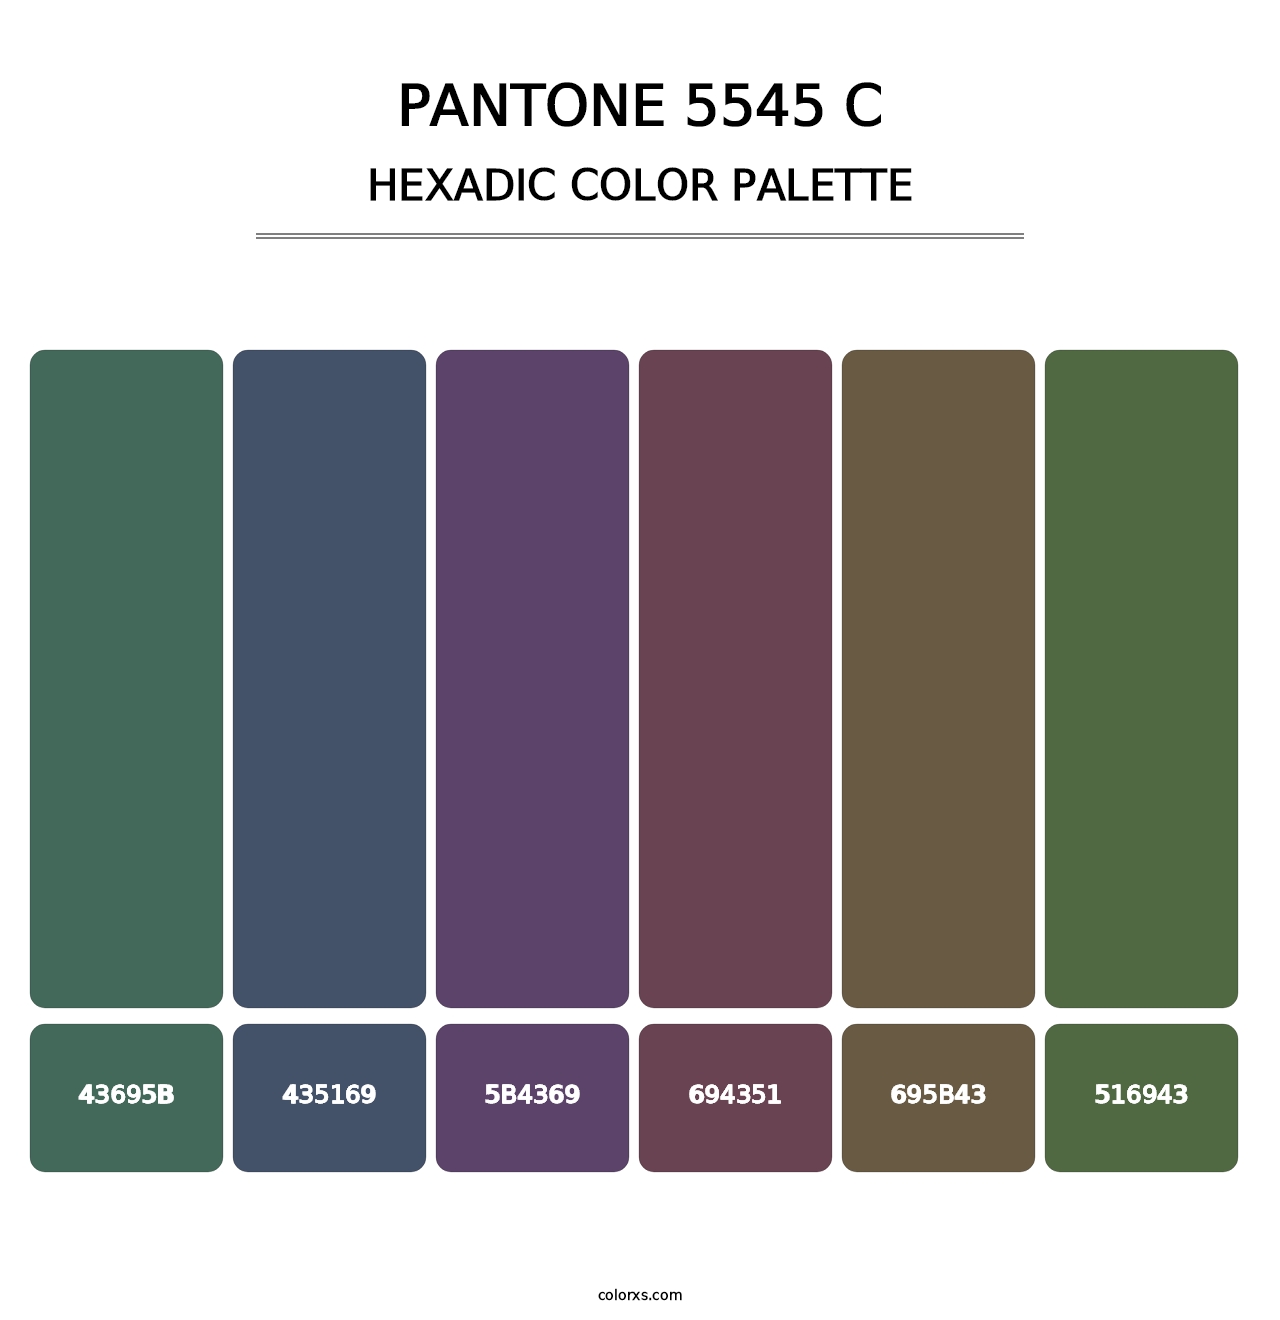 PANTONE 5545 C - Hexadic Color Palette